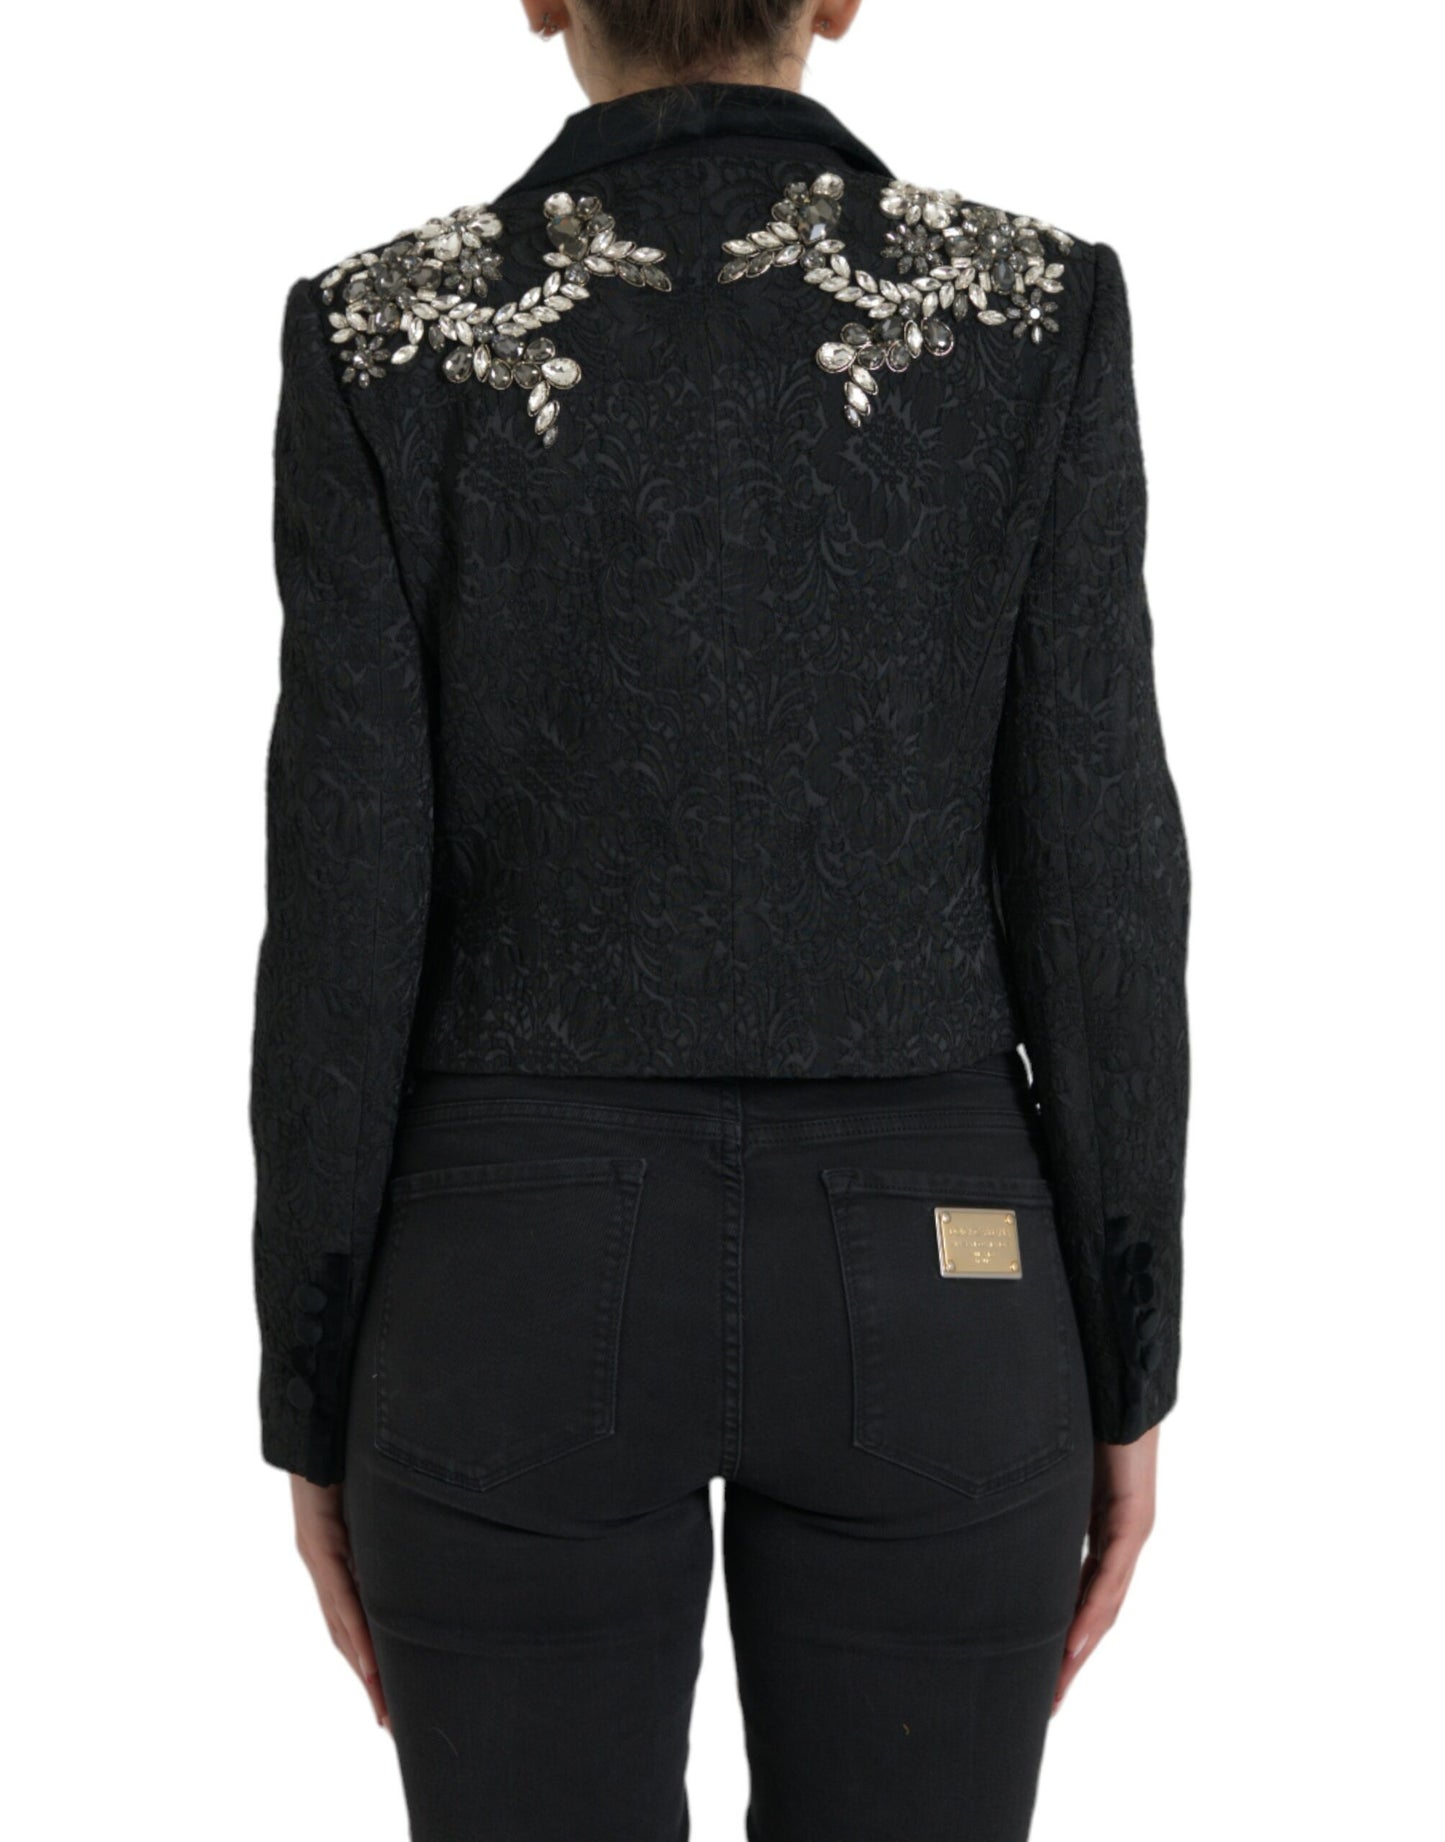 Elegant Embellished Black Overcoat Jacket